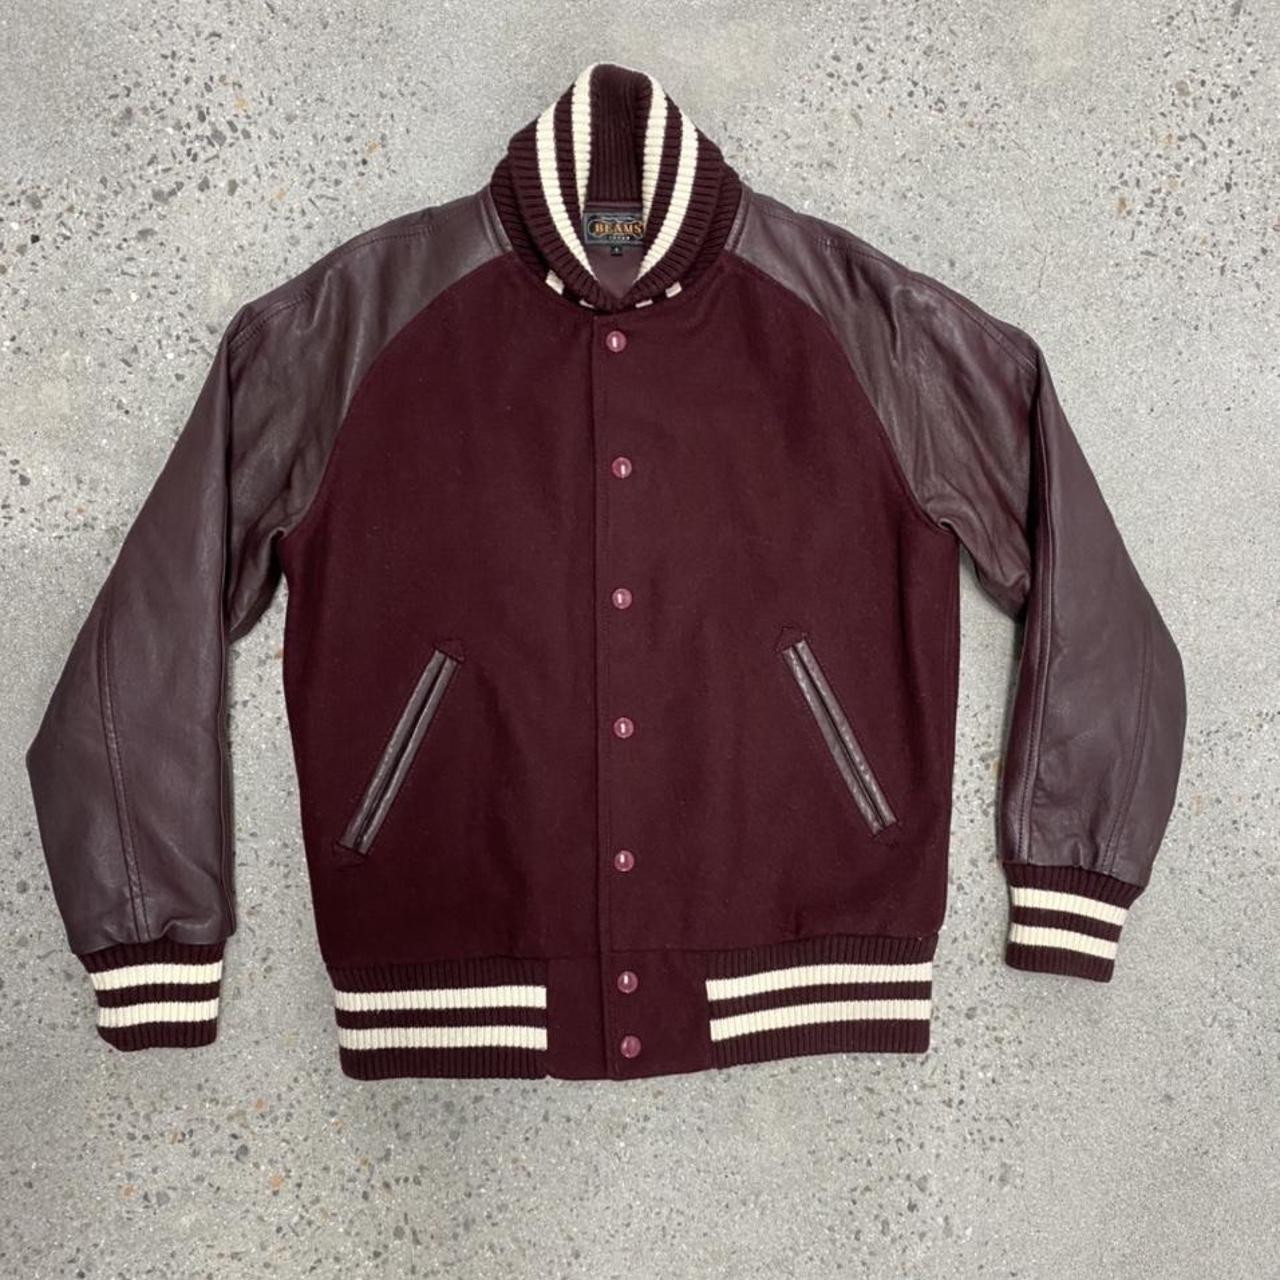 Vintage varsity jacket , Burgundy jacket, Small, Beams